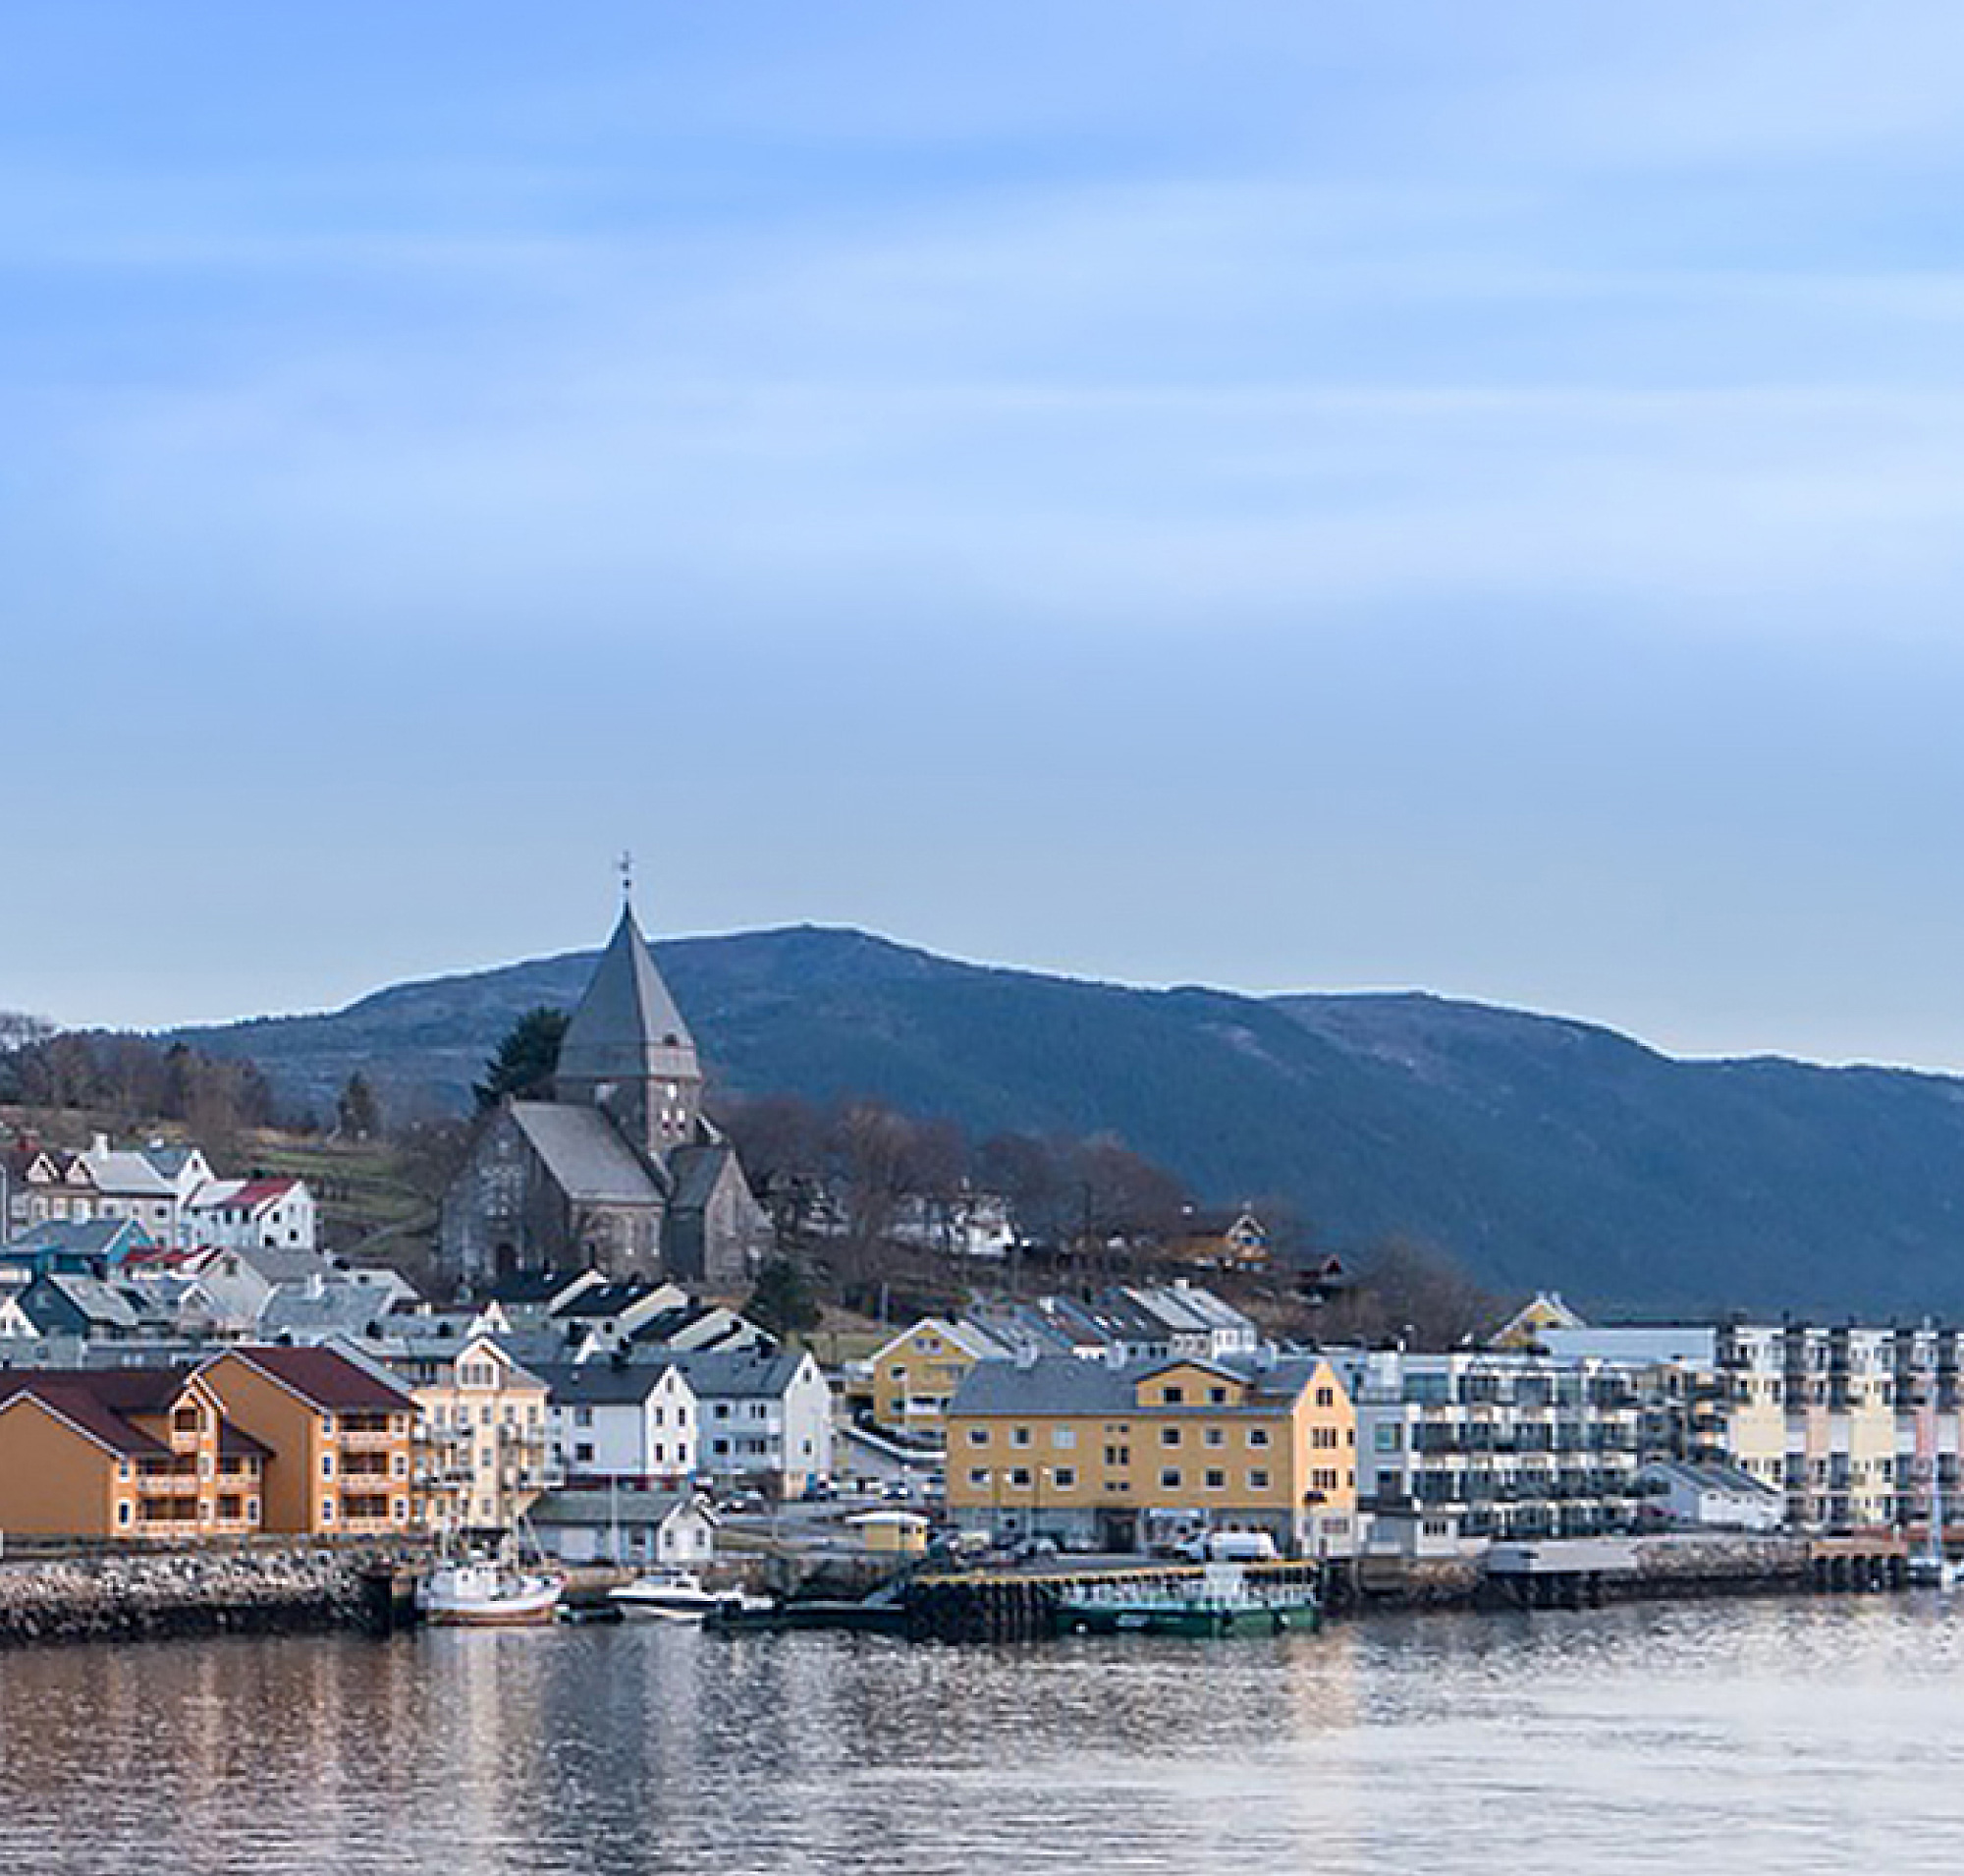 Slikovit pogled na priobalni norveški grad sa živopisnim zgradama i istaknutom crkvom, postavljenom na pozadini brda 